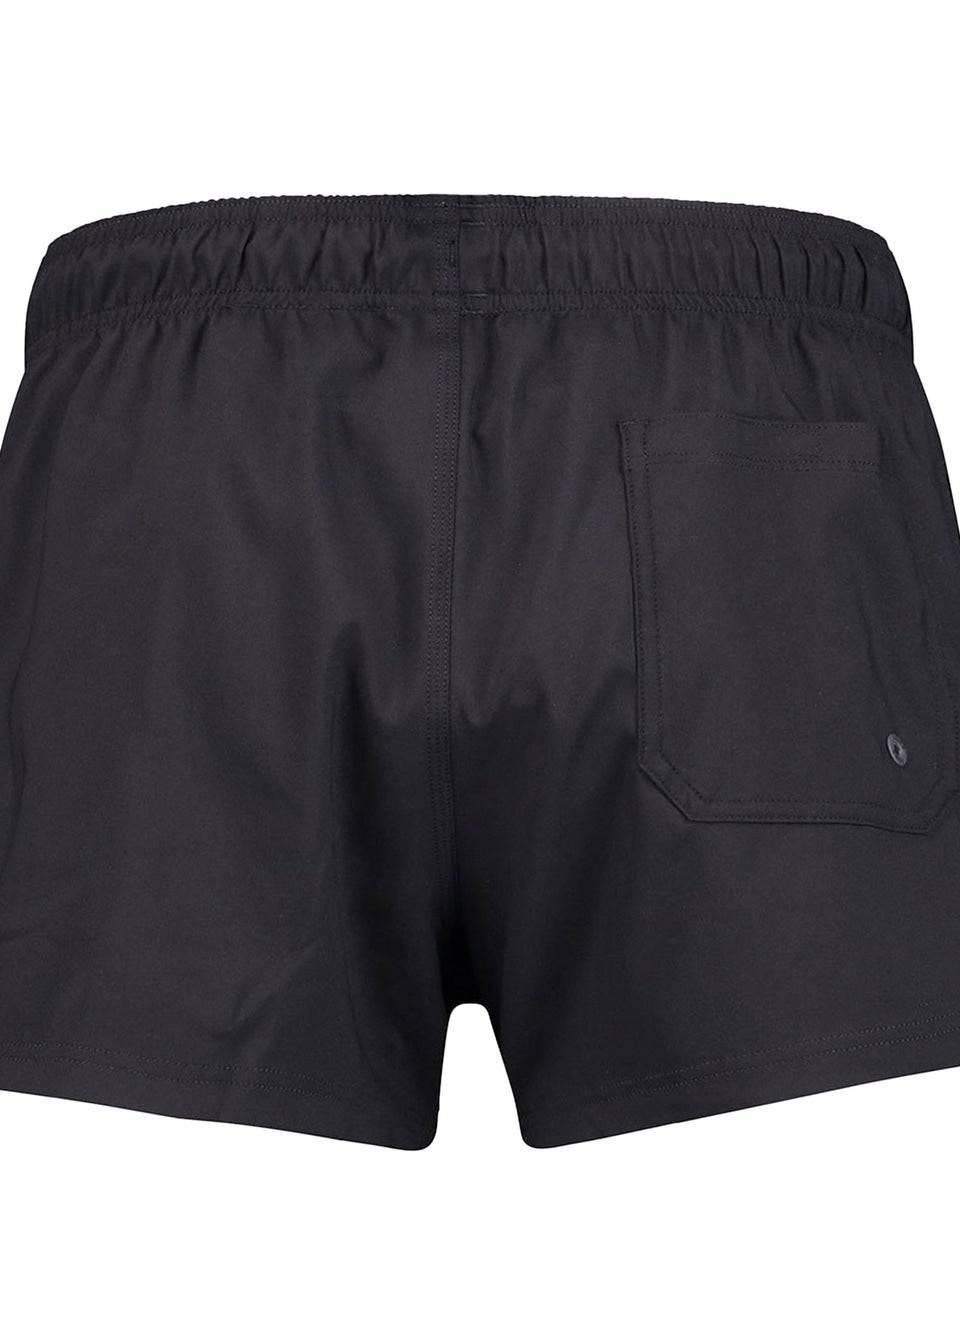 Puma Black Contrast Drawstring Swimming Shorts